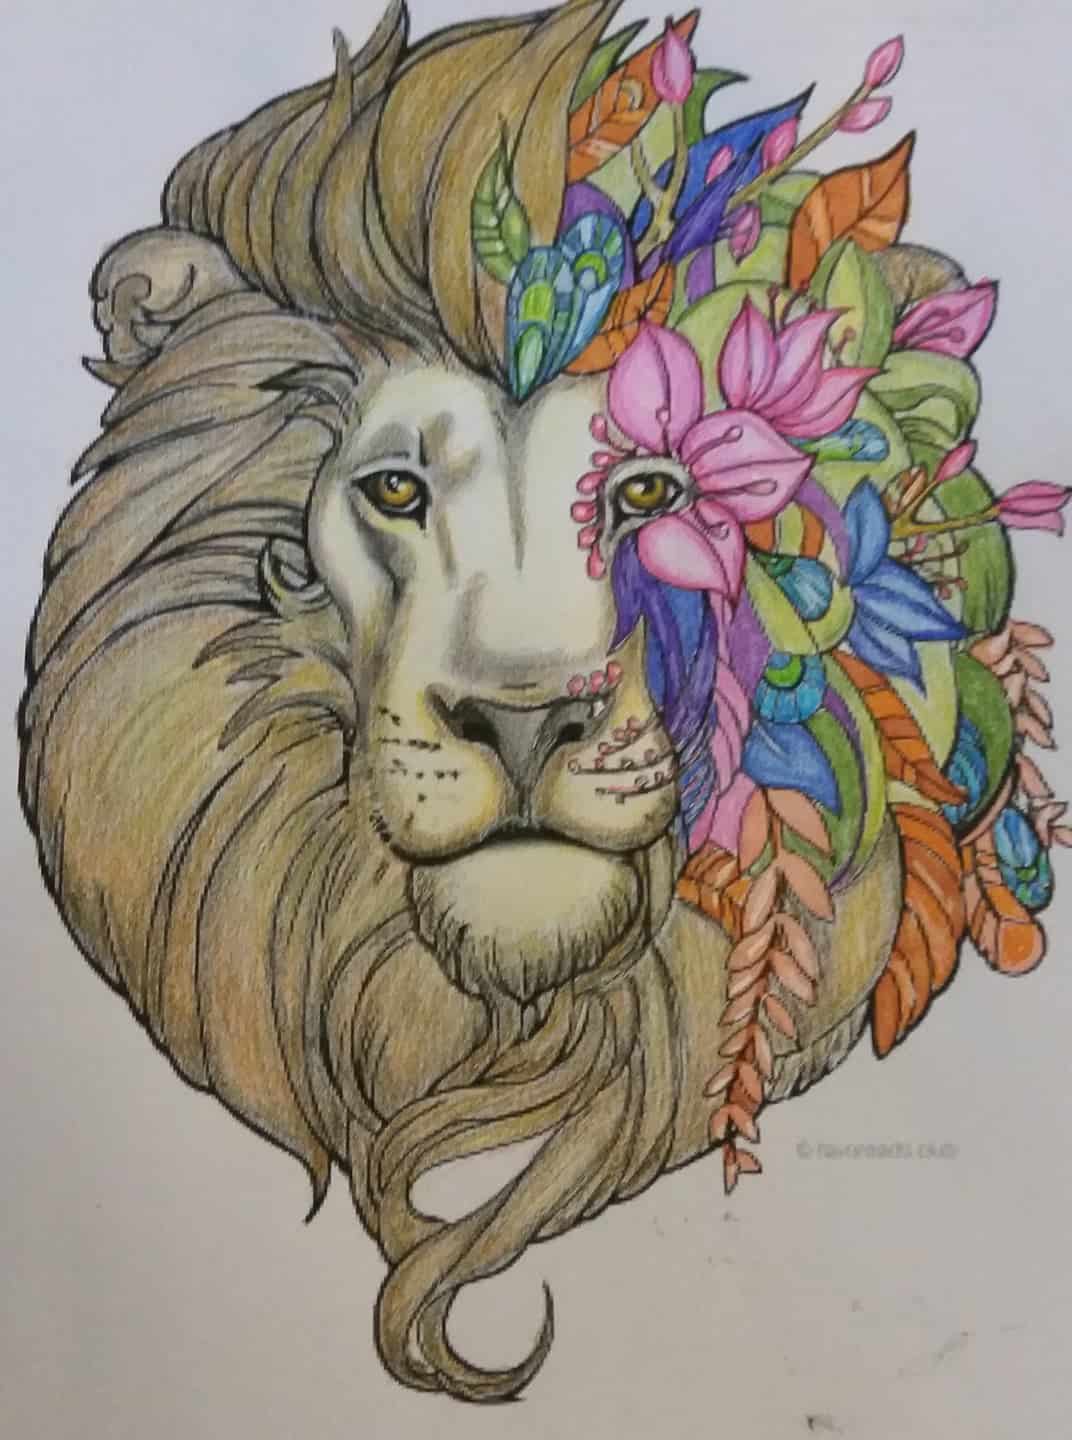 Fantasy Lion